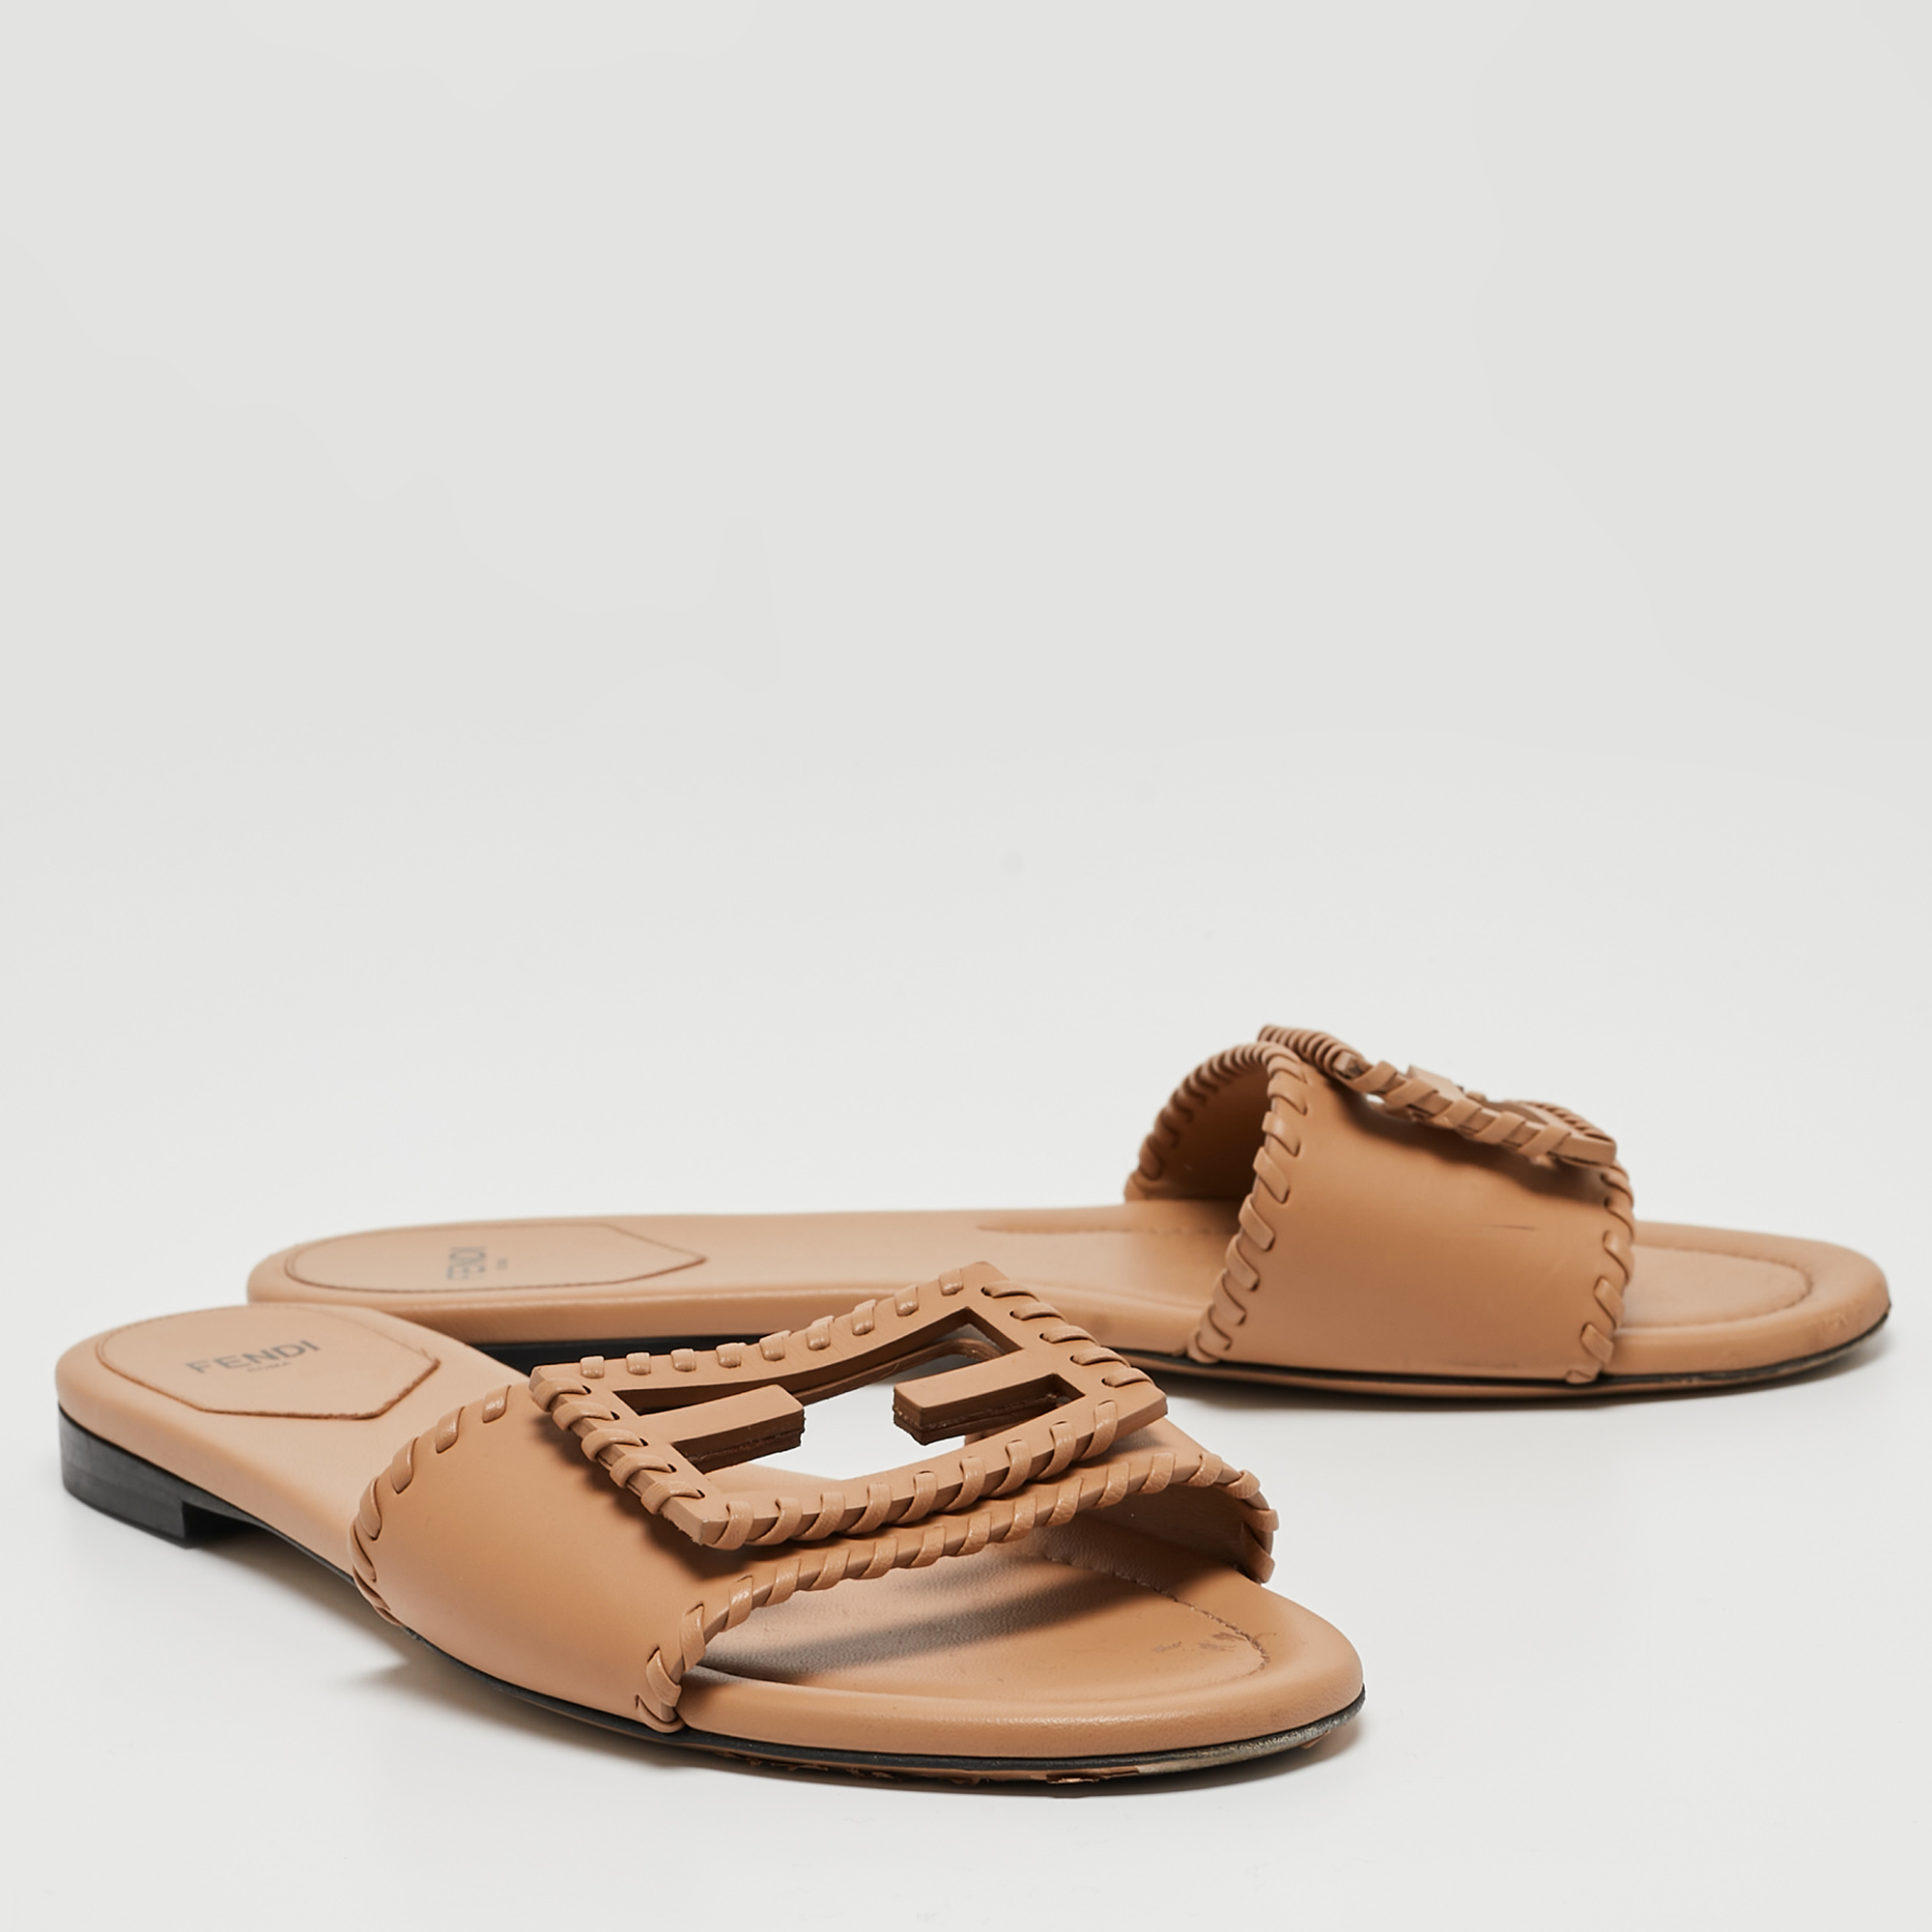 Fendi Light Brown Leather Flat Slides Size 40